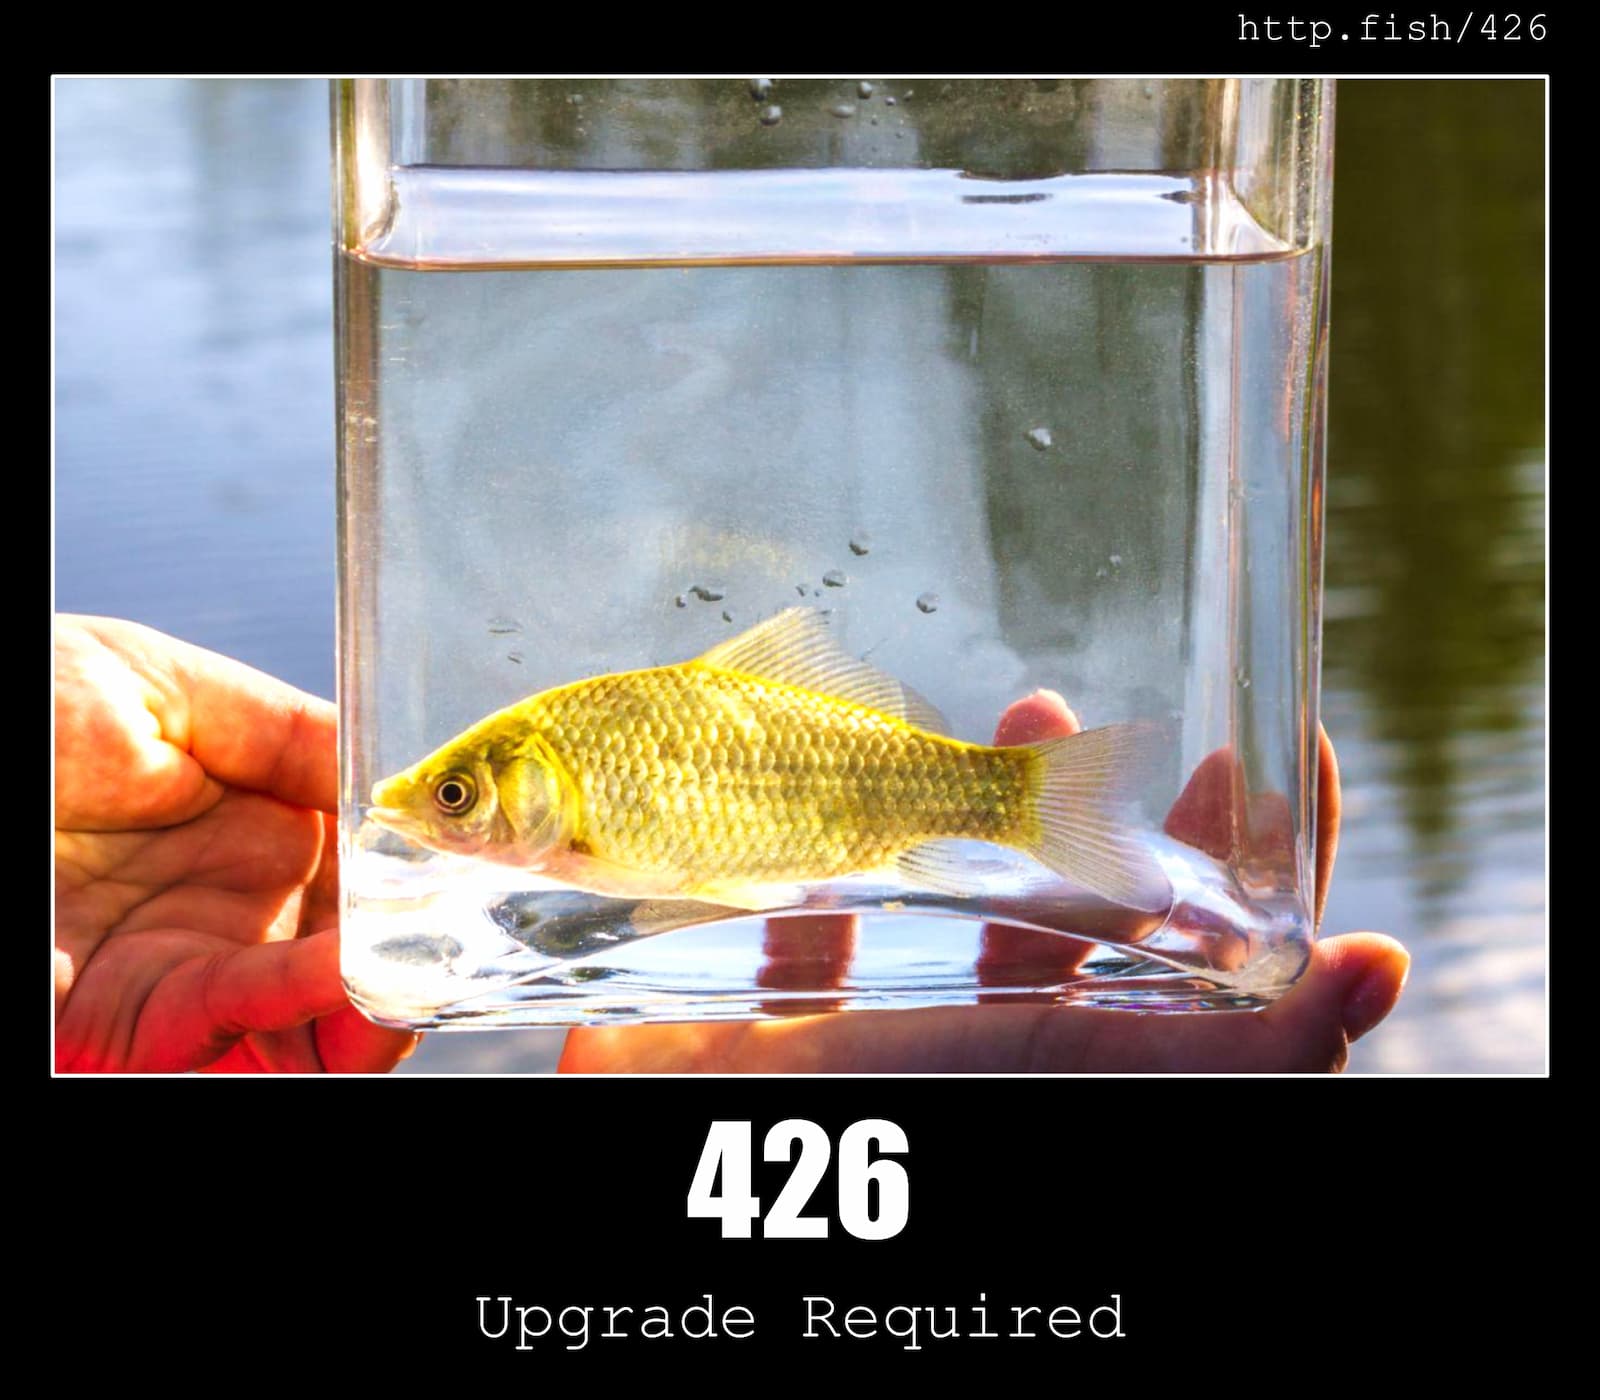 HTTP Status Code 426 Upgrade Required & Fish